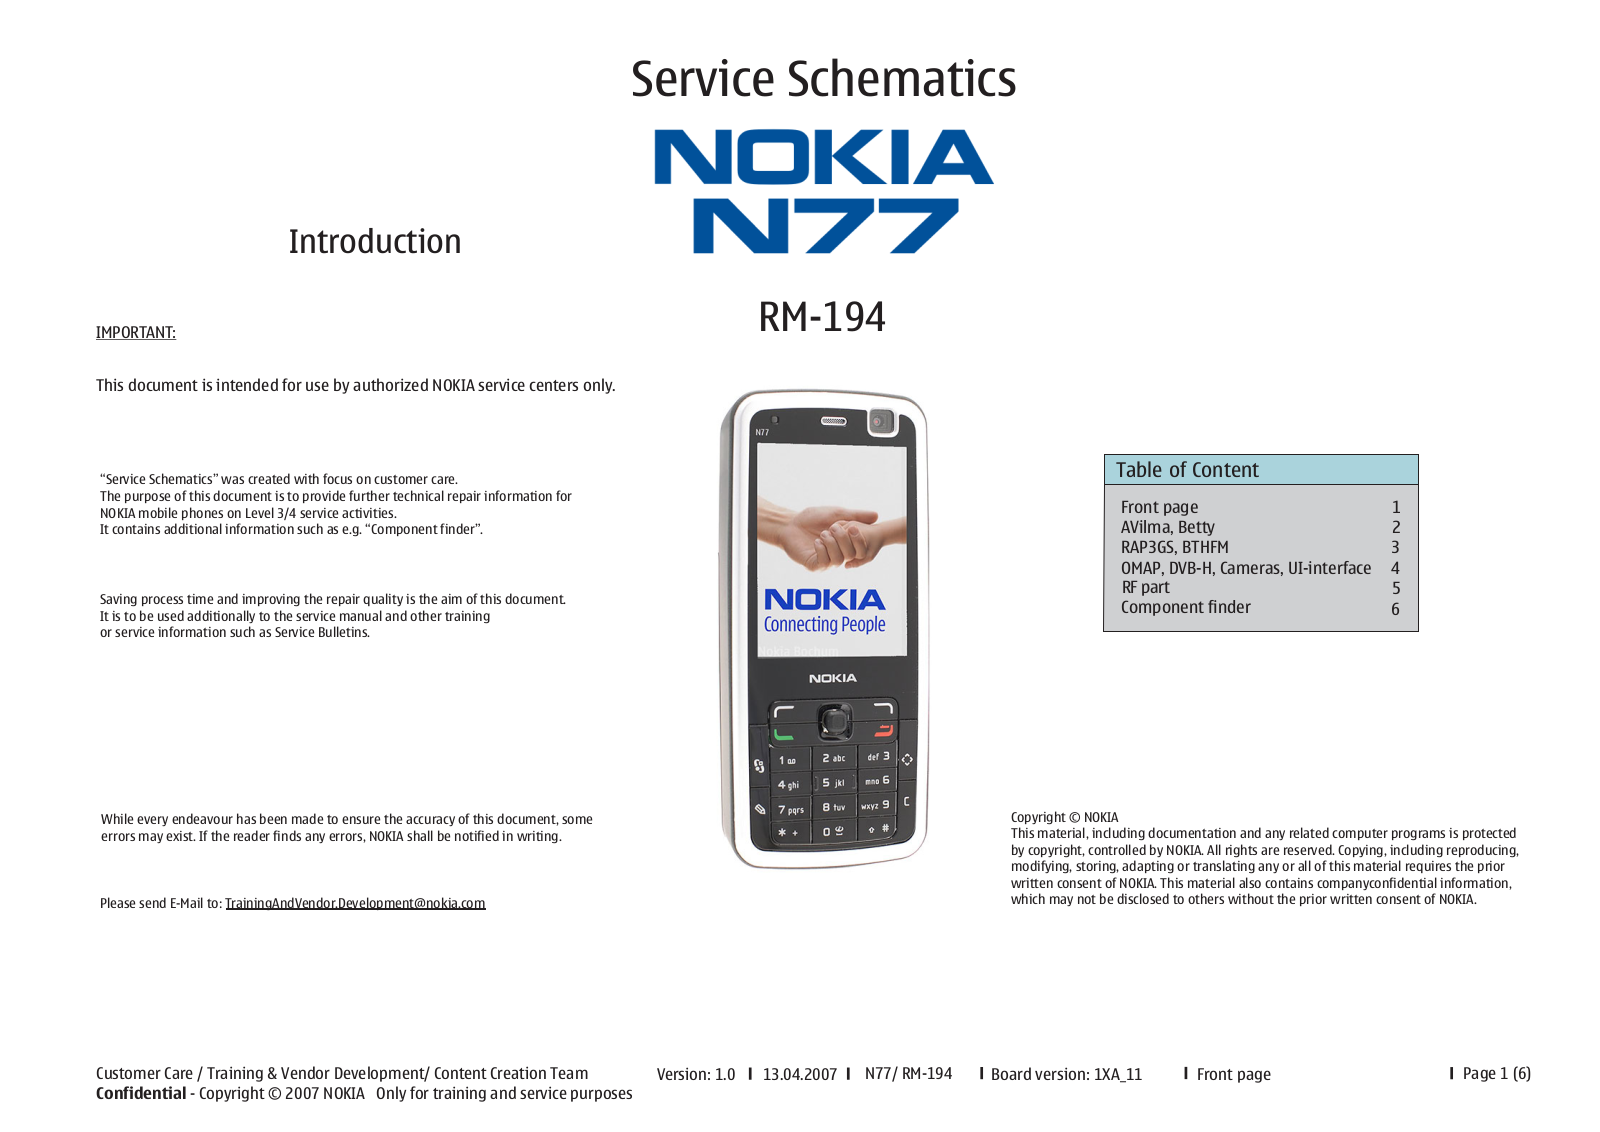 Nokia N77 RM-194, N77 RM-195 Schematic